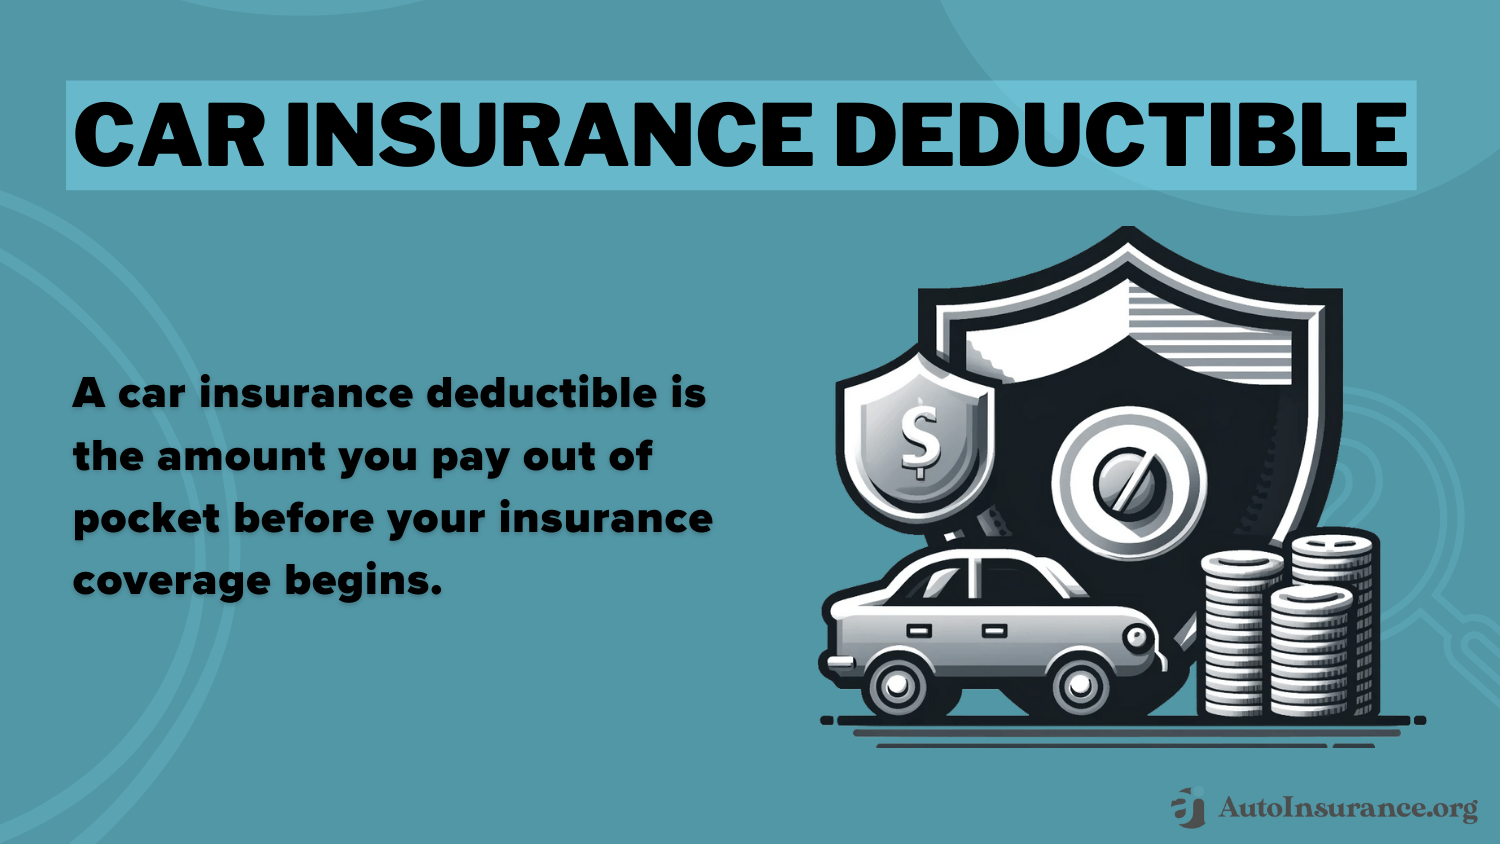 Auto Insurance Deductibles: Car Insurance Deductible Definition Card